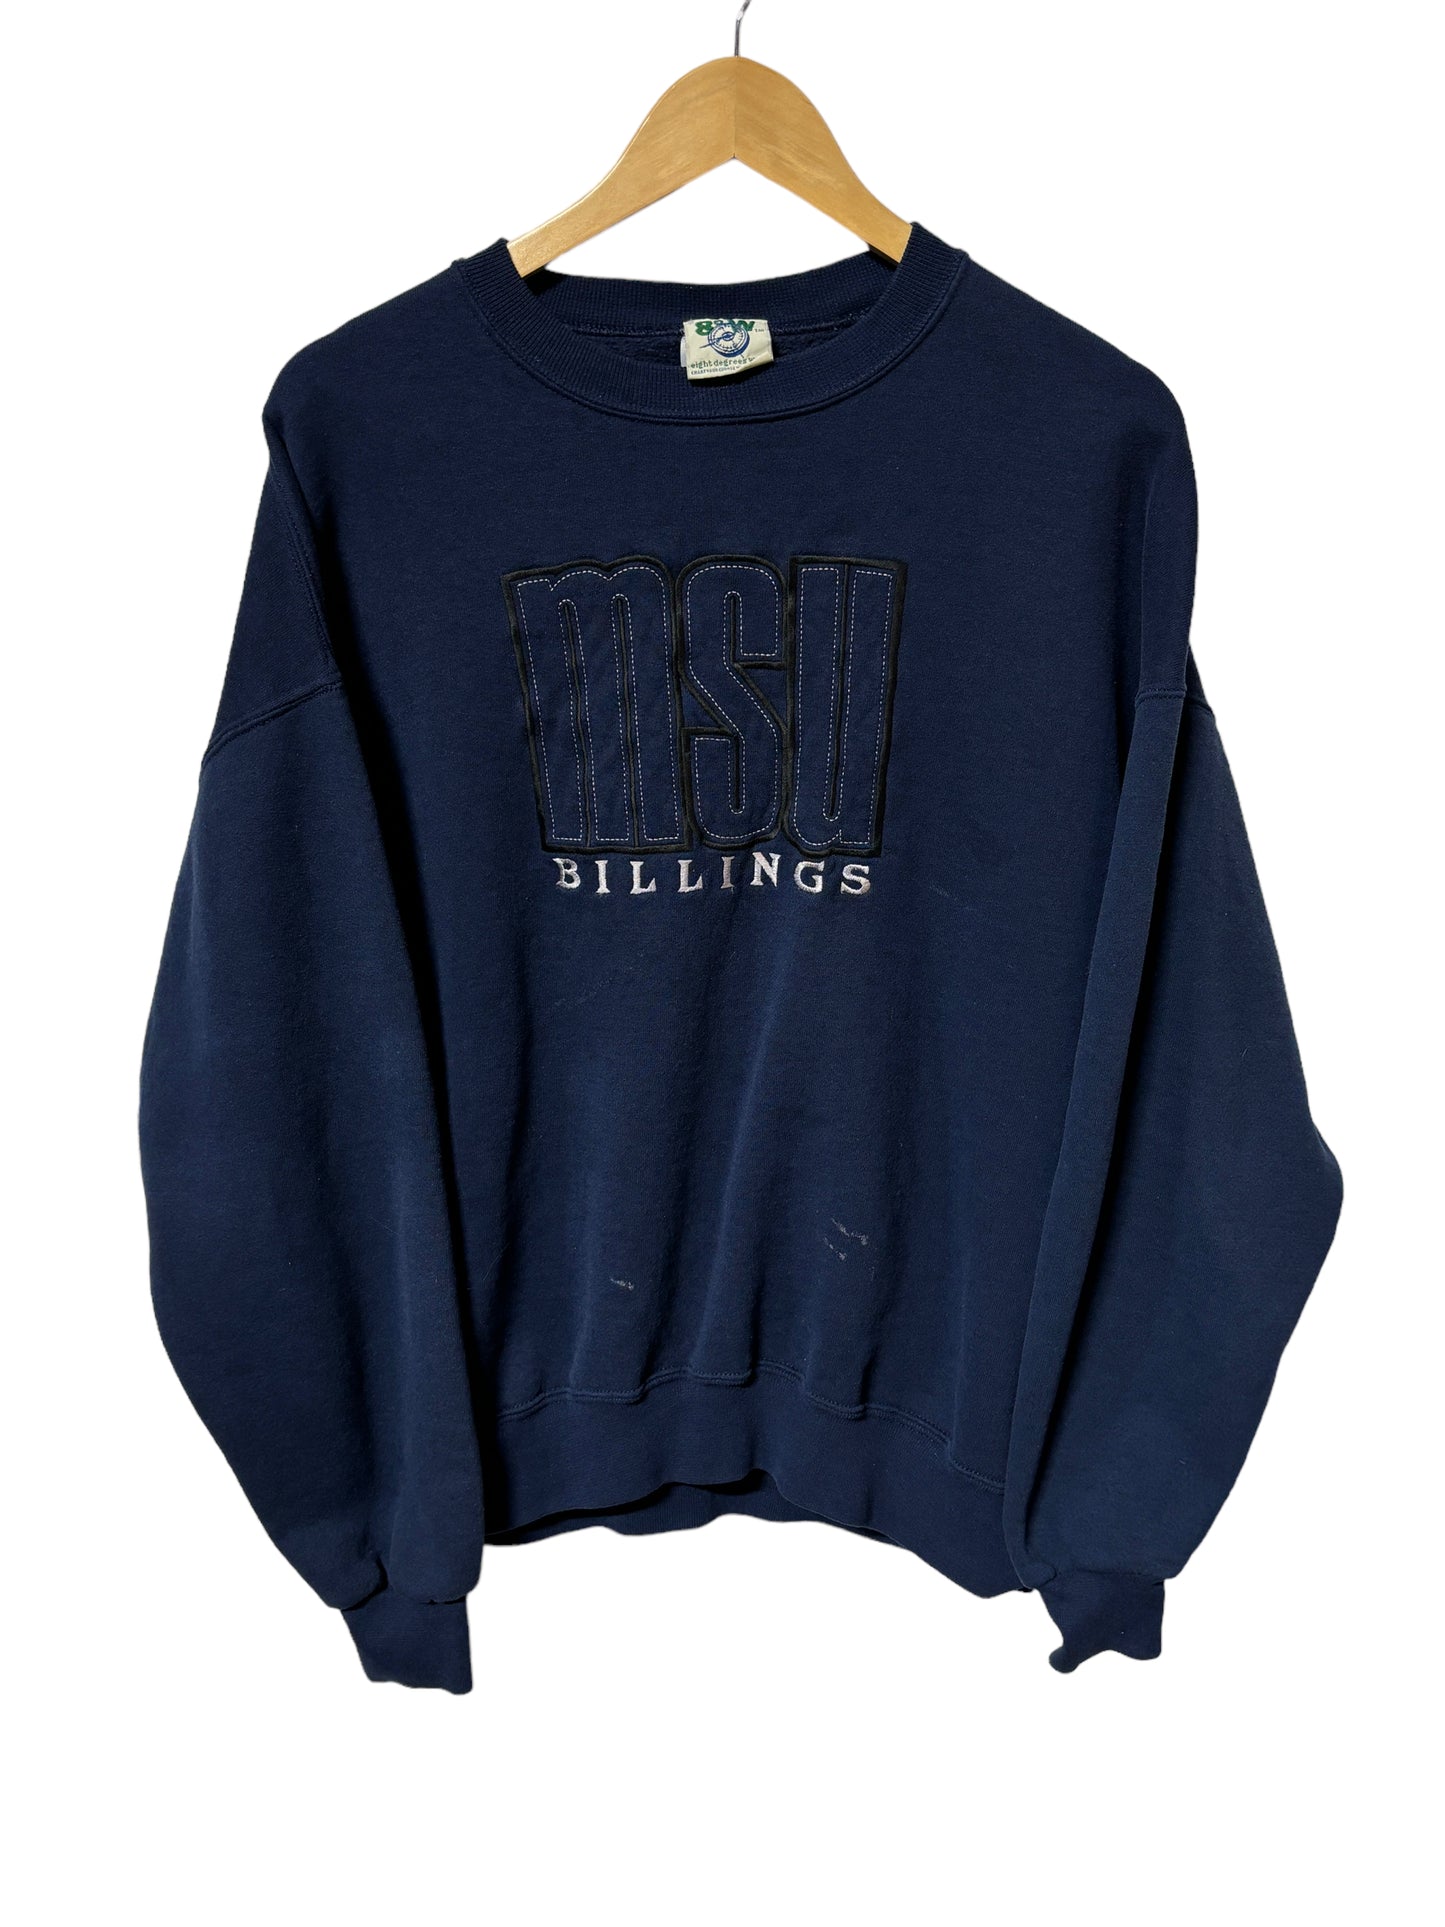 Vintage 90's MSU Billings Fleece Crewneck Sweater Size XL